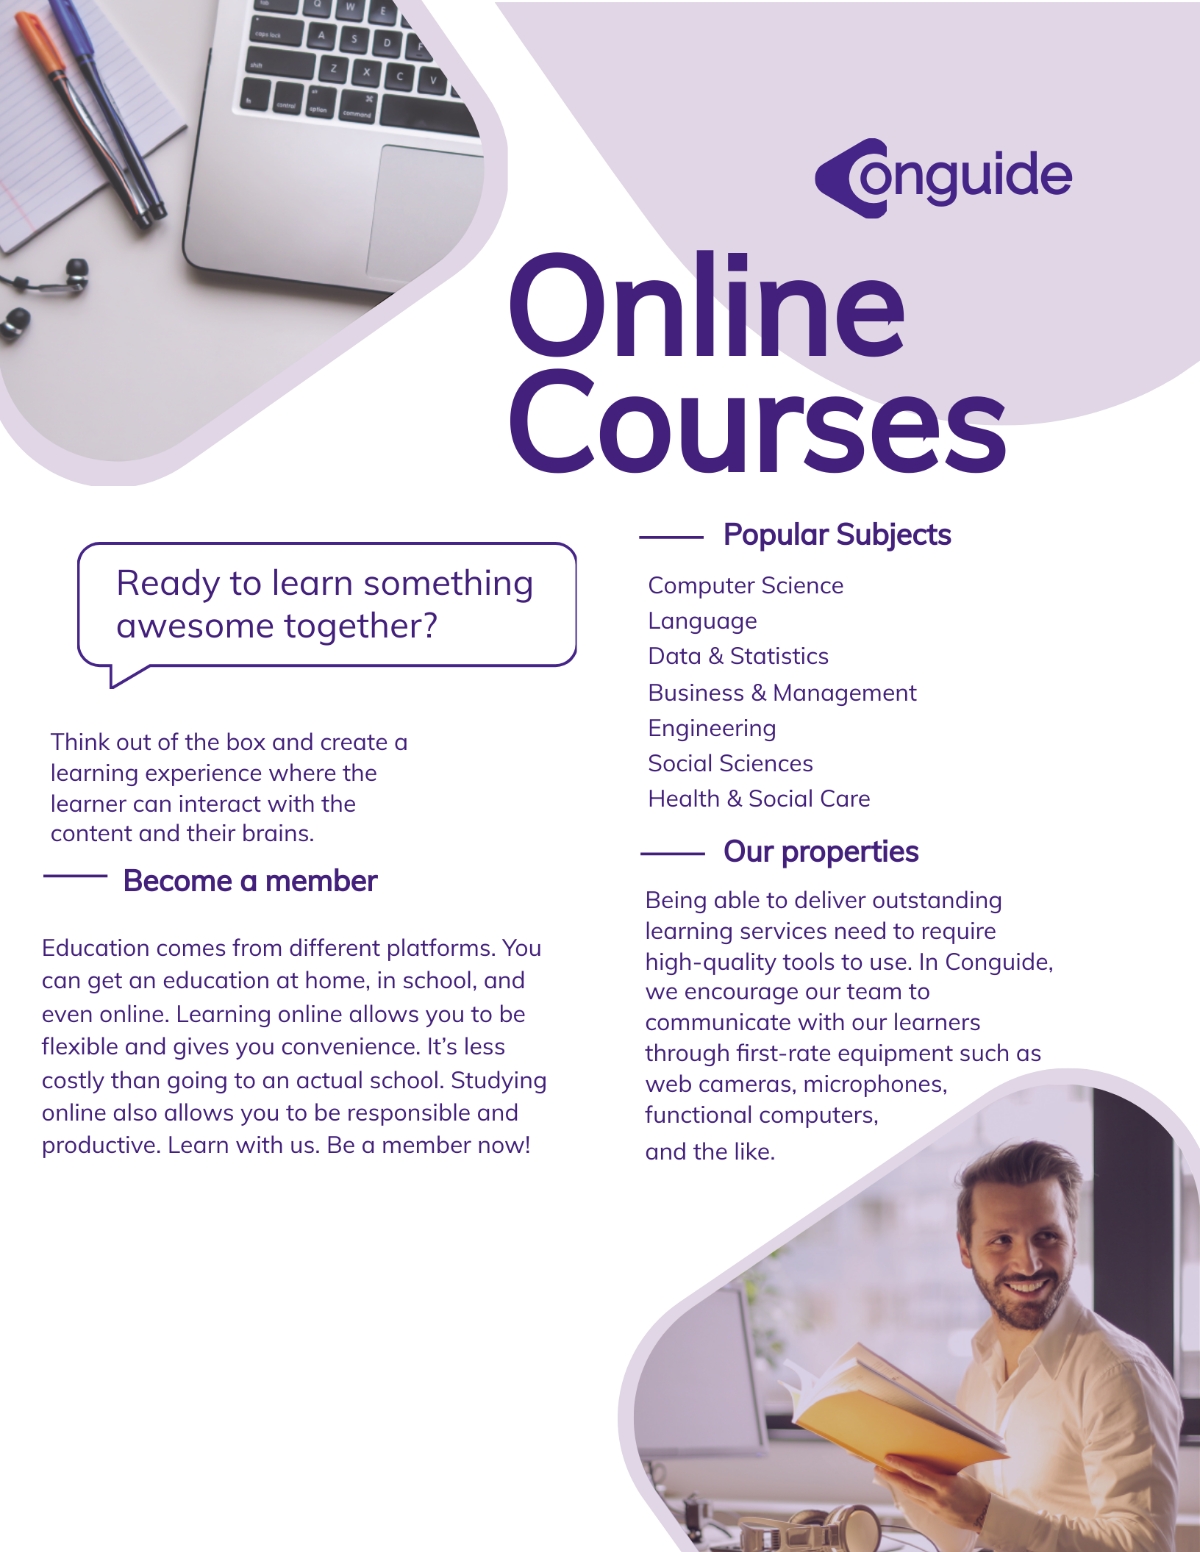 Online Courses Leaflet Template